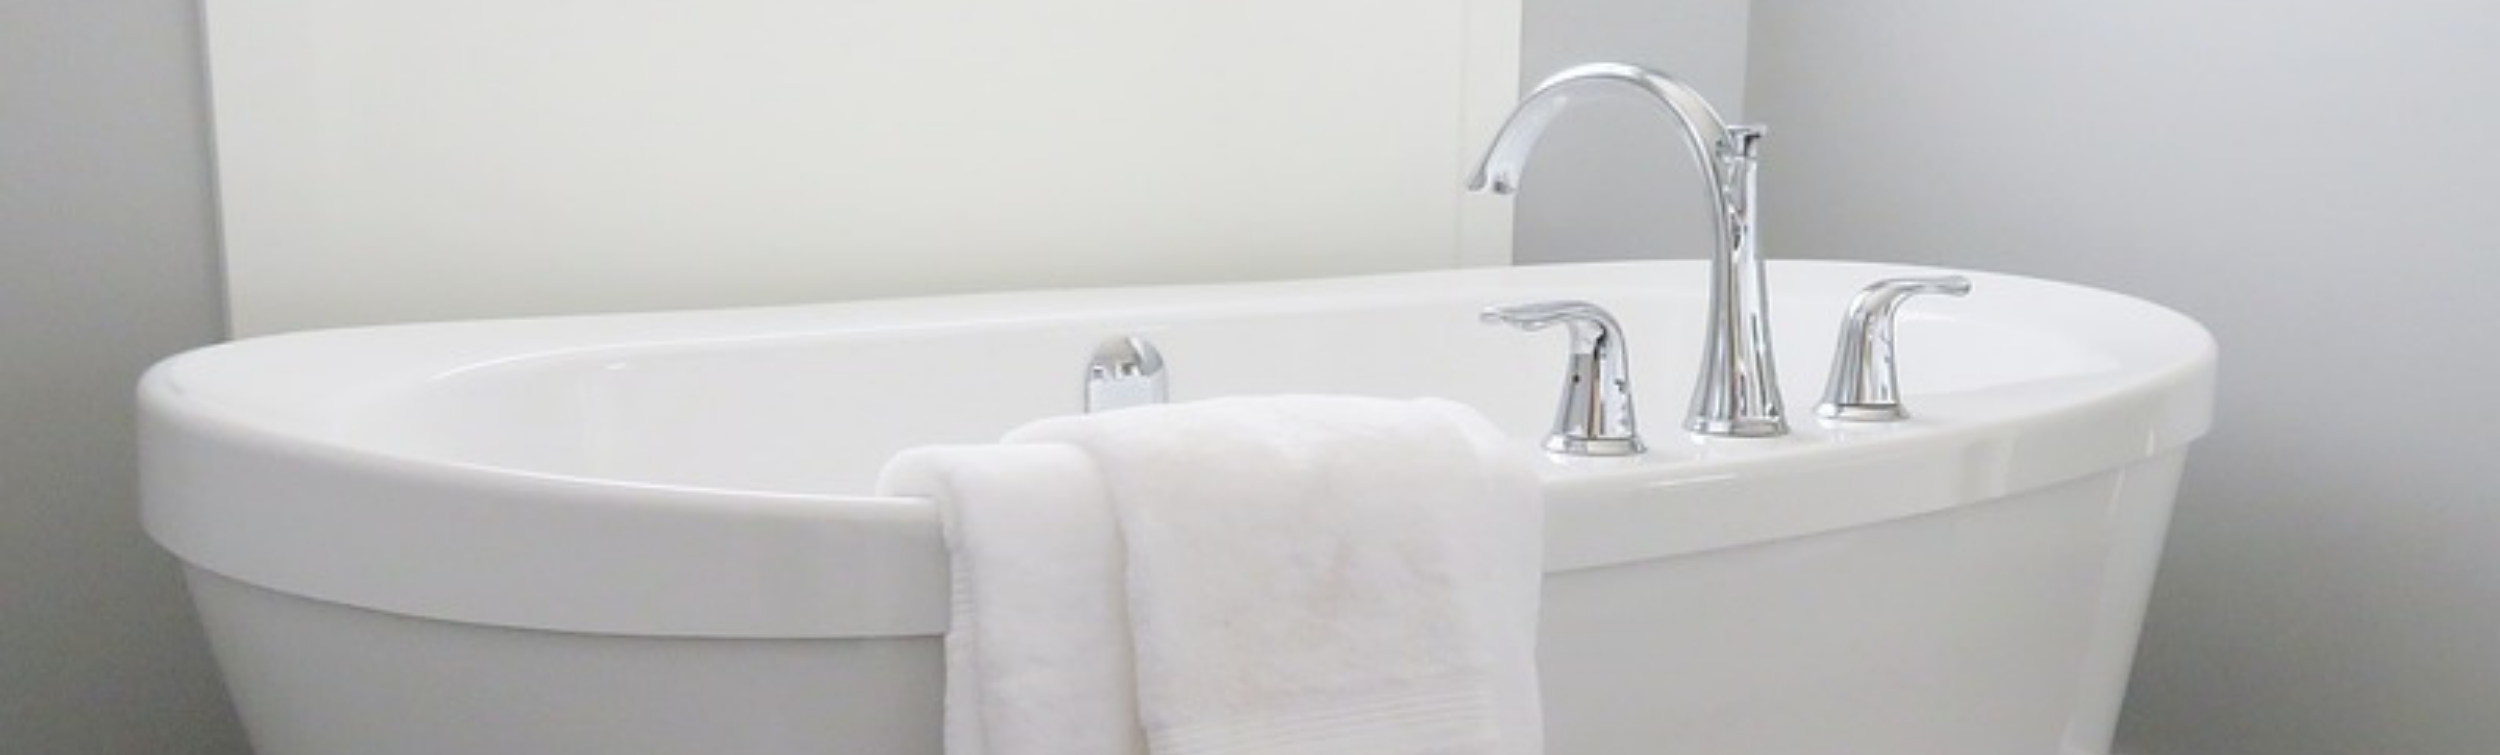 14 Secrets to a Luxurious Bathroom Design